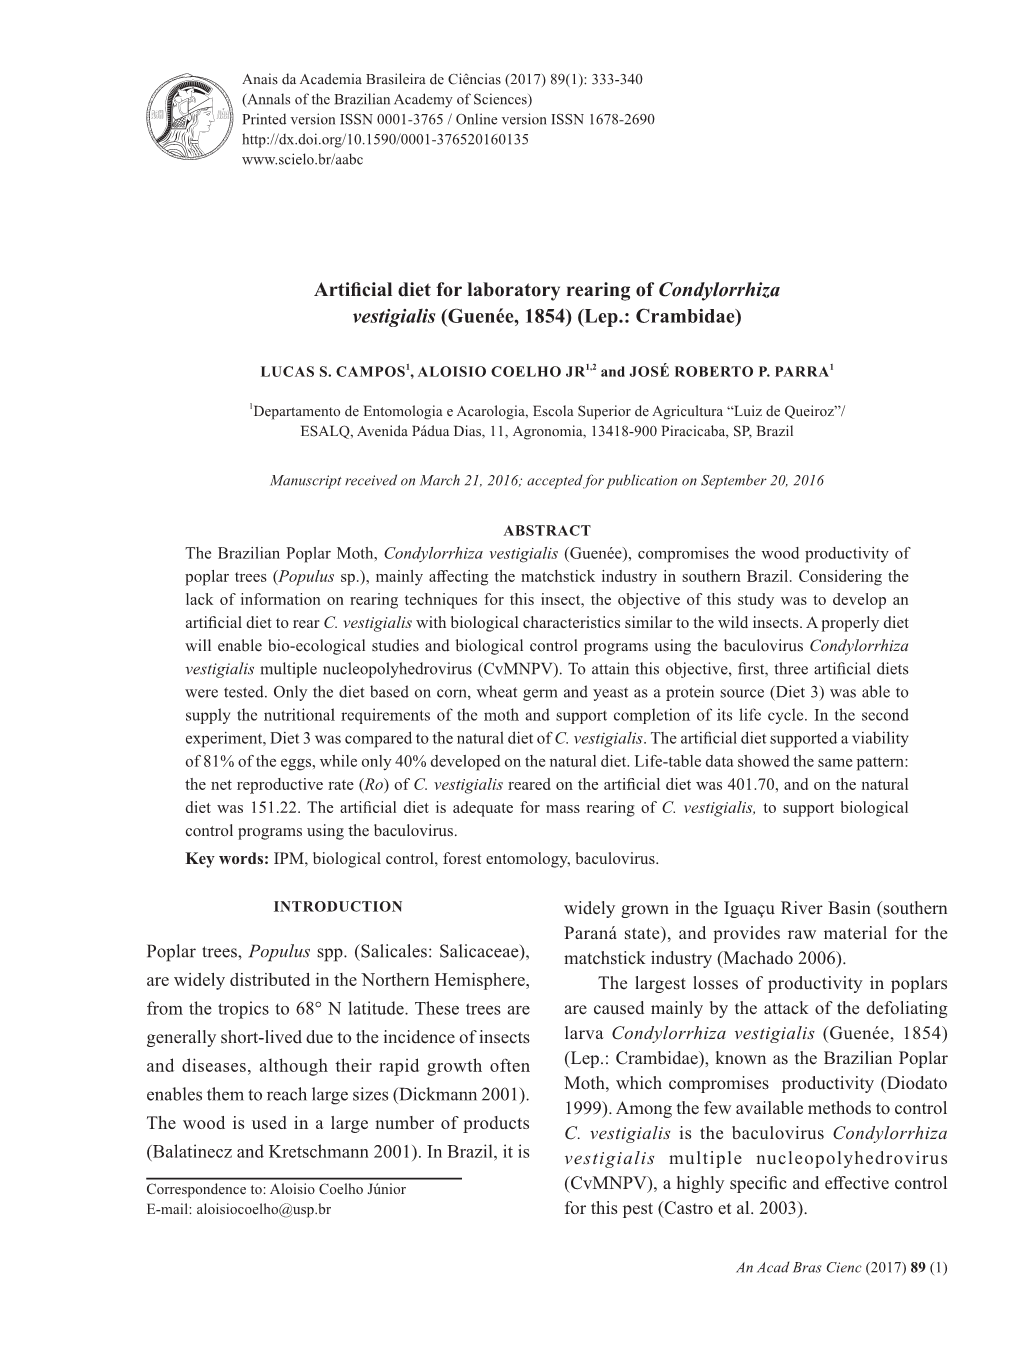 Artificial Diet for Laboratory Rearing of Condylorrhiza Vestigialis (Guenée, 1854) (Lep.: Crambidae)